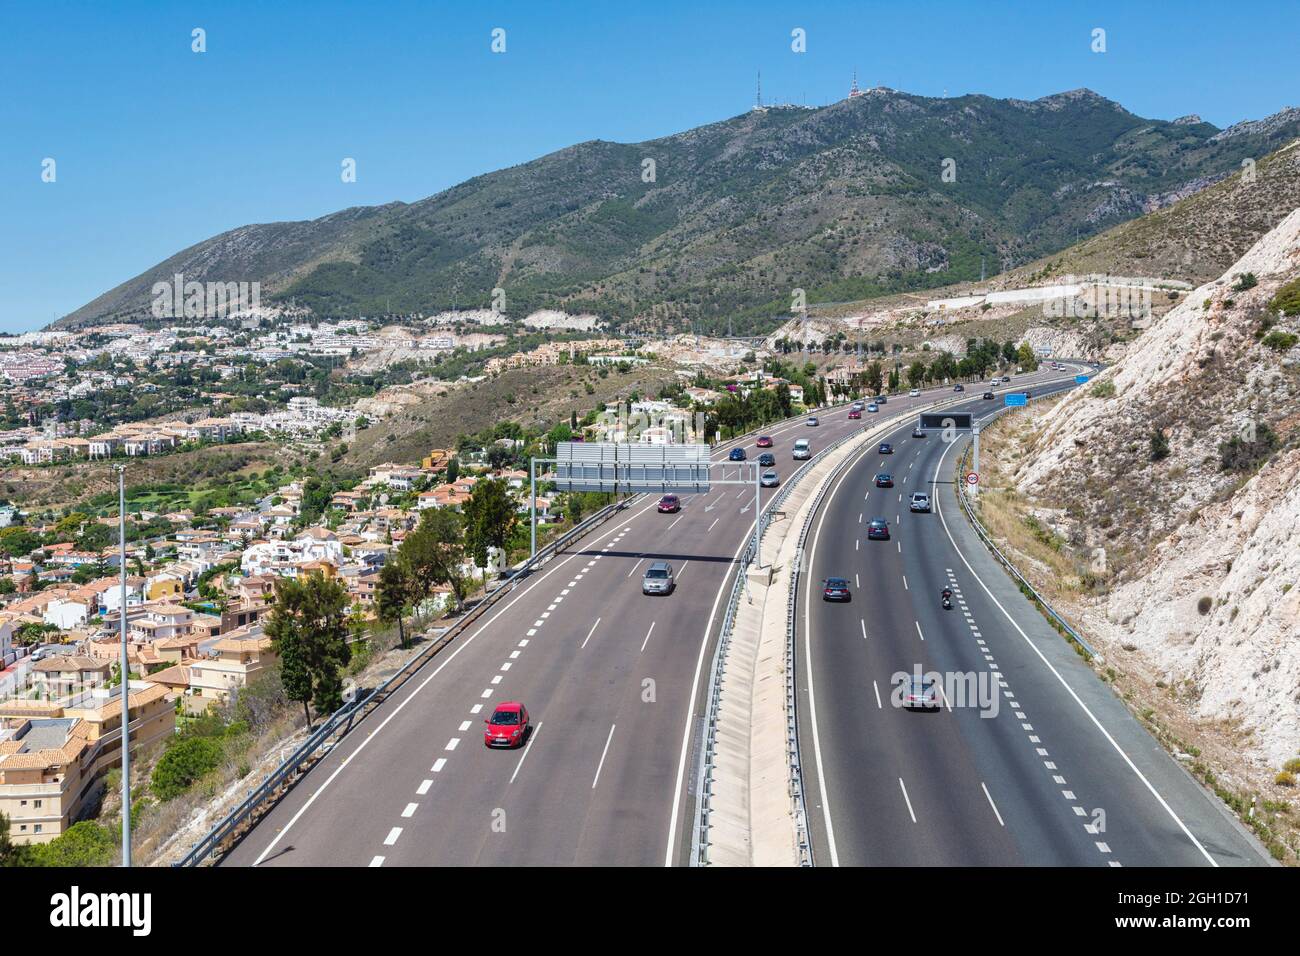 Aerial view of A-7, E-15 motorway. Costa del Sol, Malaga Province, Spain. The town to the left is Arroyo de la Miel. Stock Photo